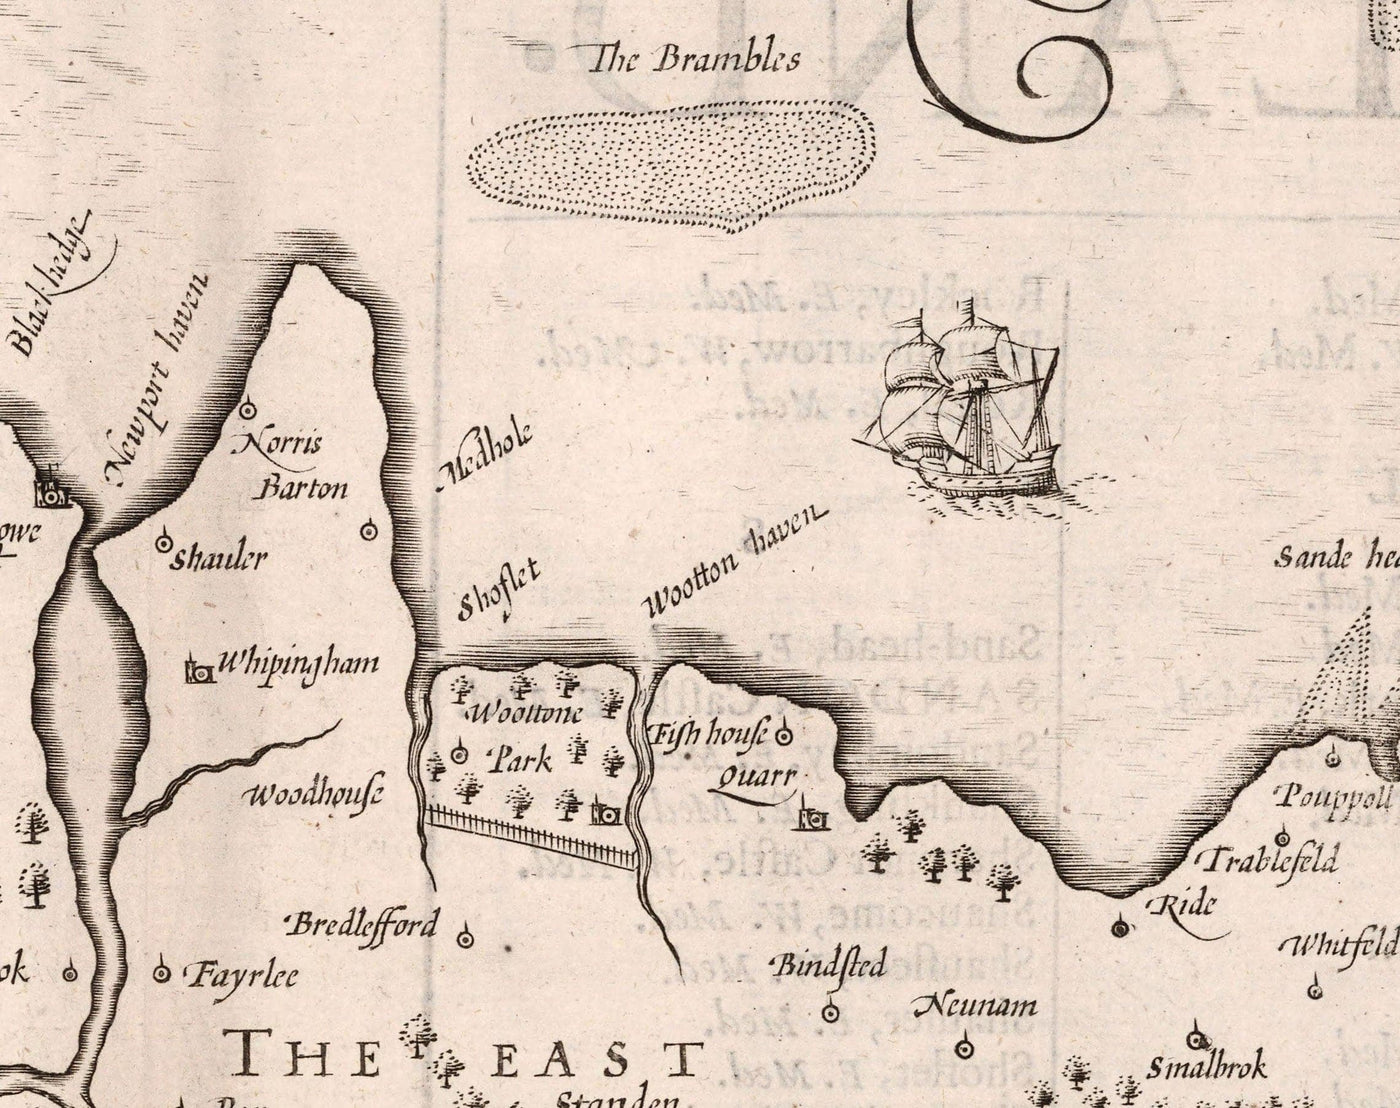 Old Monochrome Map of Isle of Wight, 1611 by John Speed - Newport, Ride, Cowes, Sandown, Shanklin, Southampton